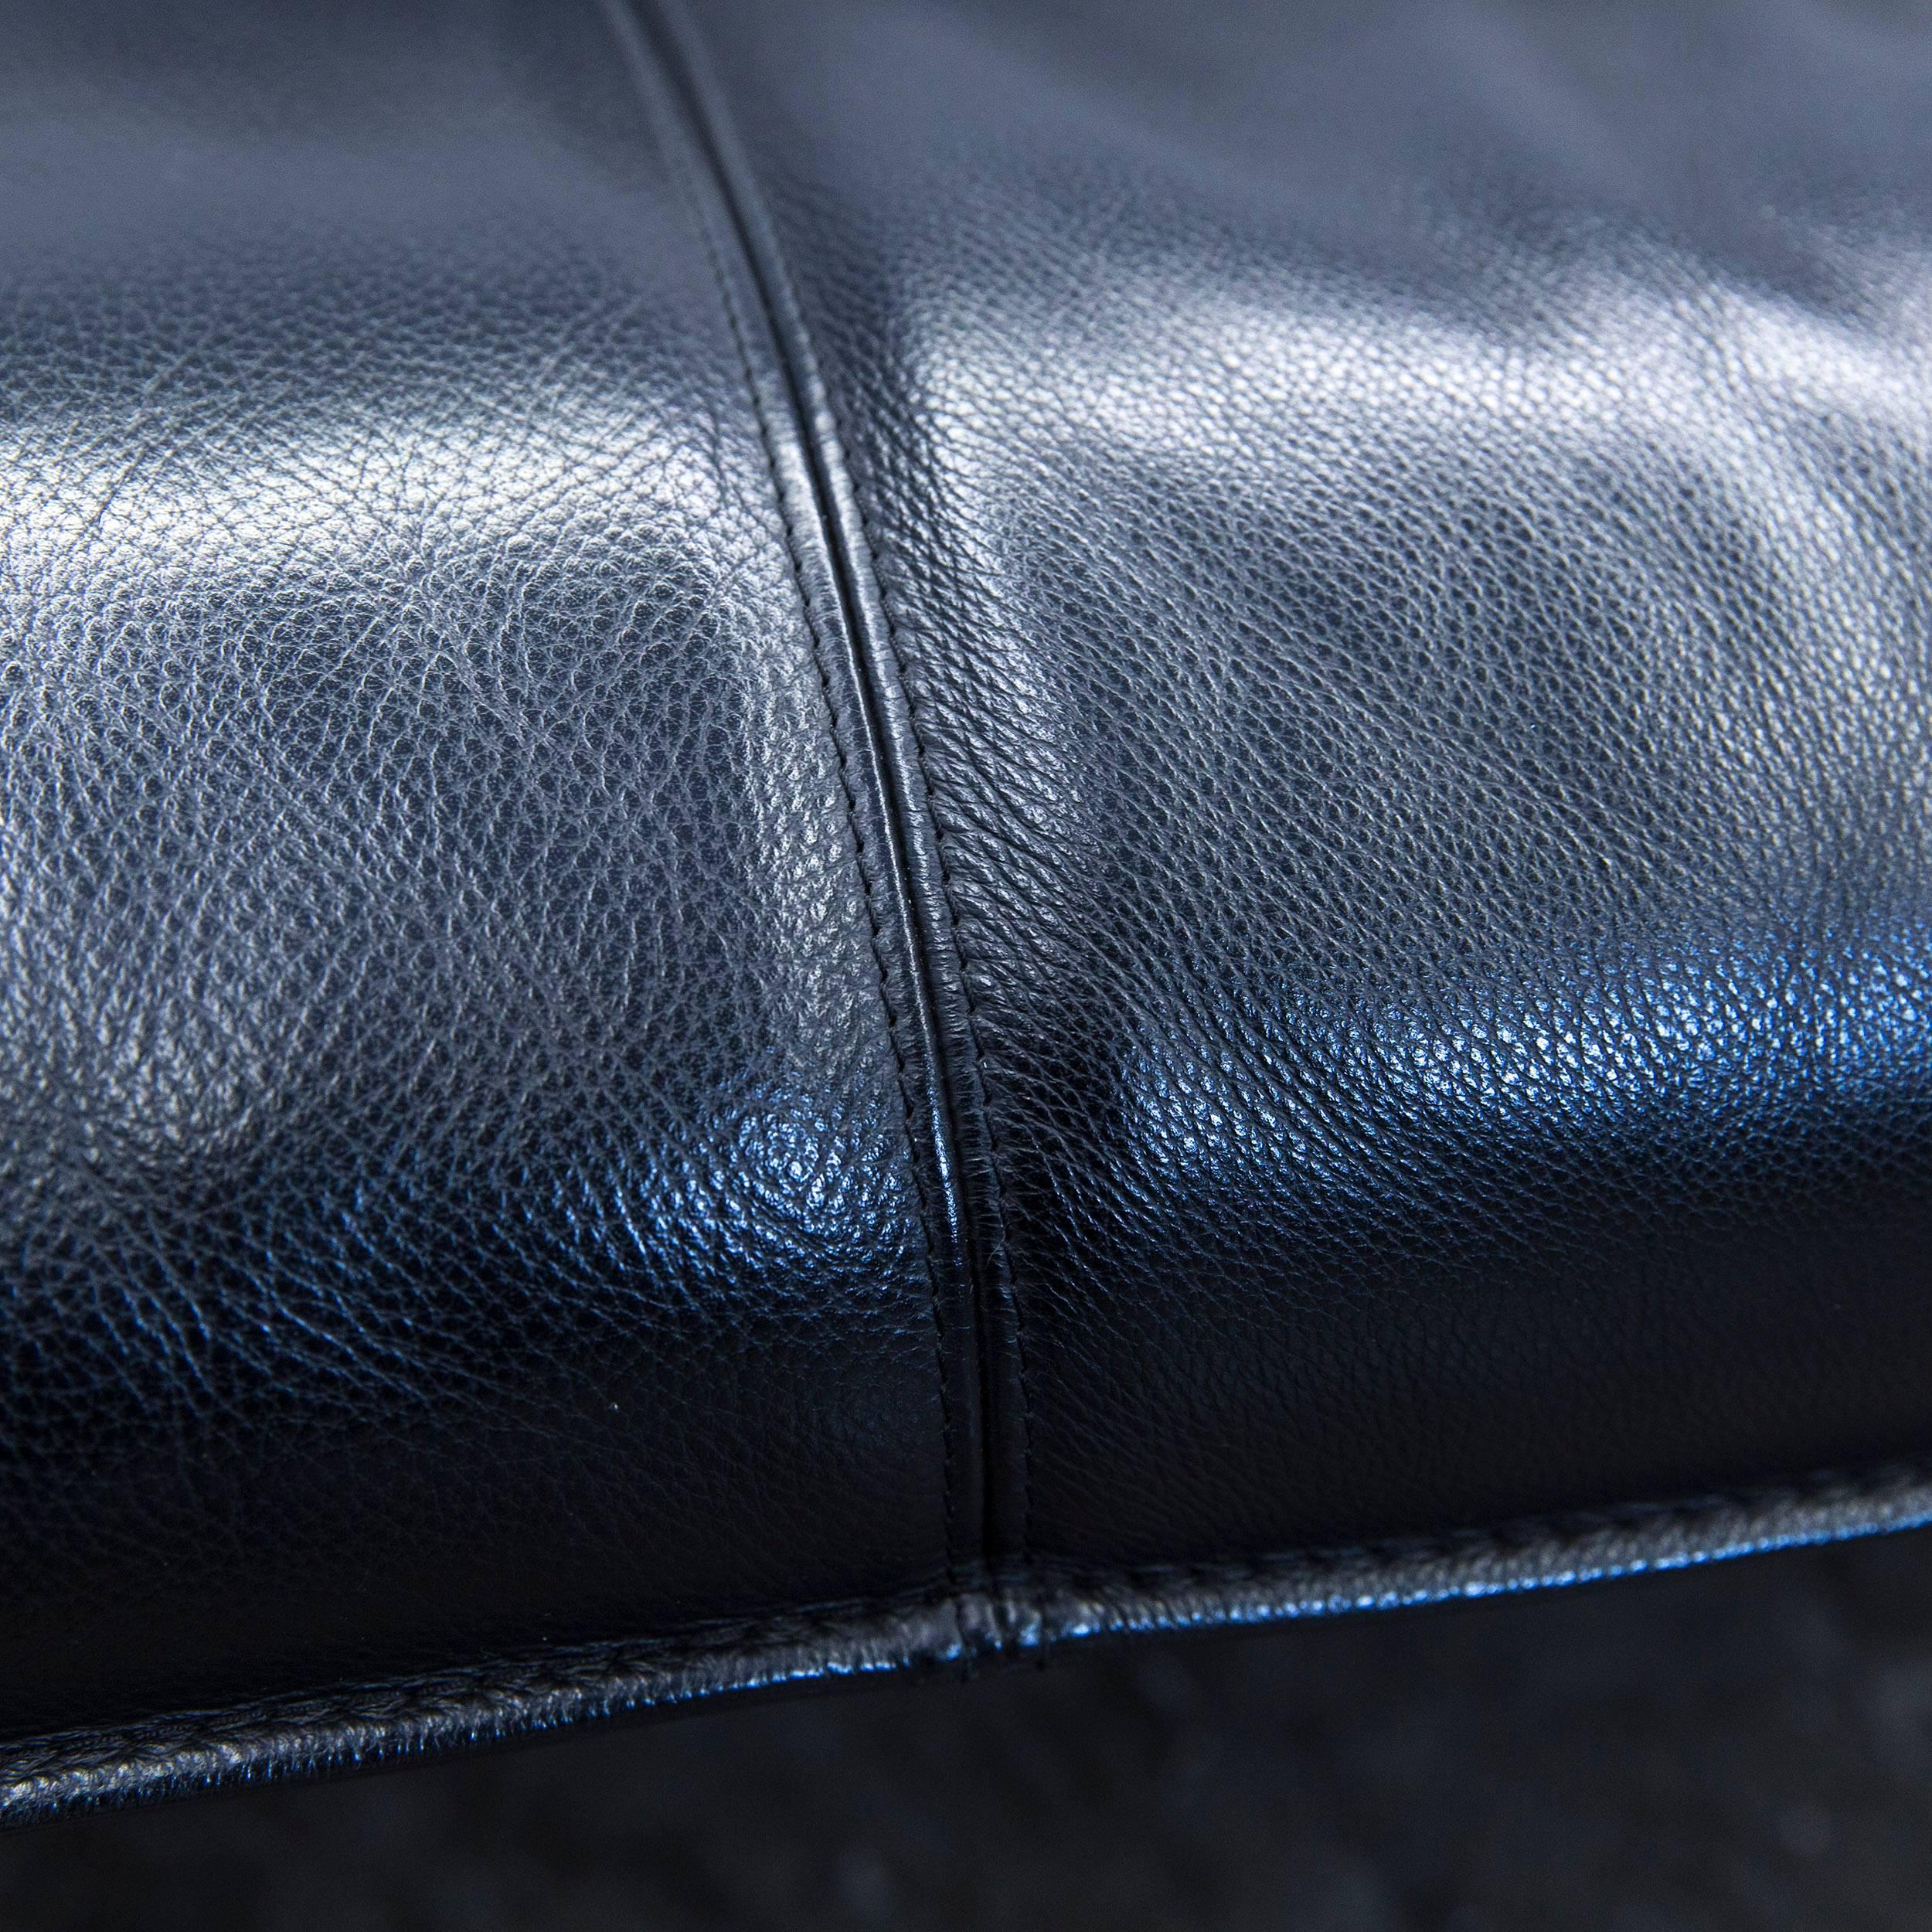 Leolux Tango Designer Leather Sofa Black Two-Seat Function Modern For Sale 3